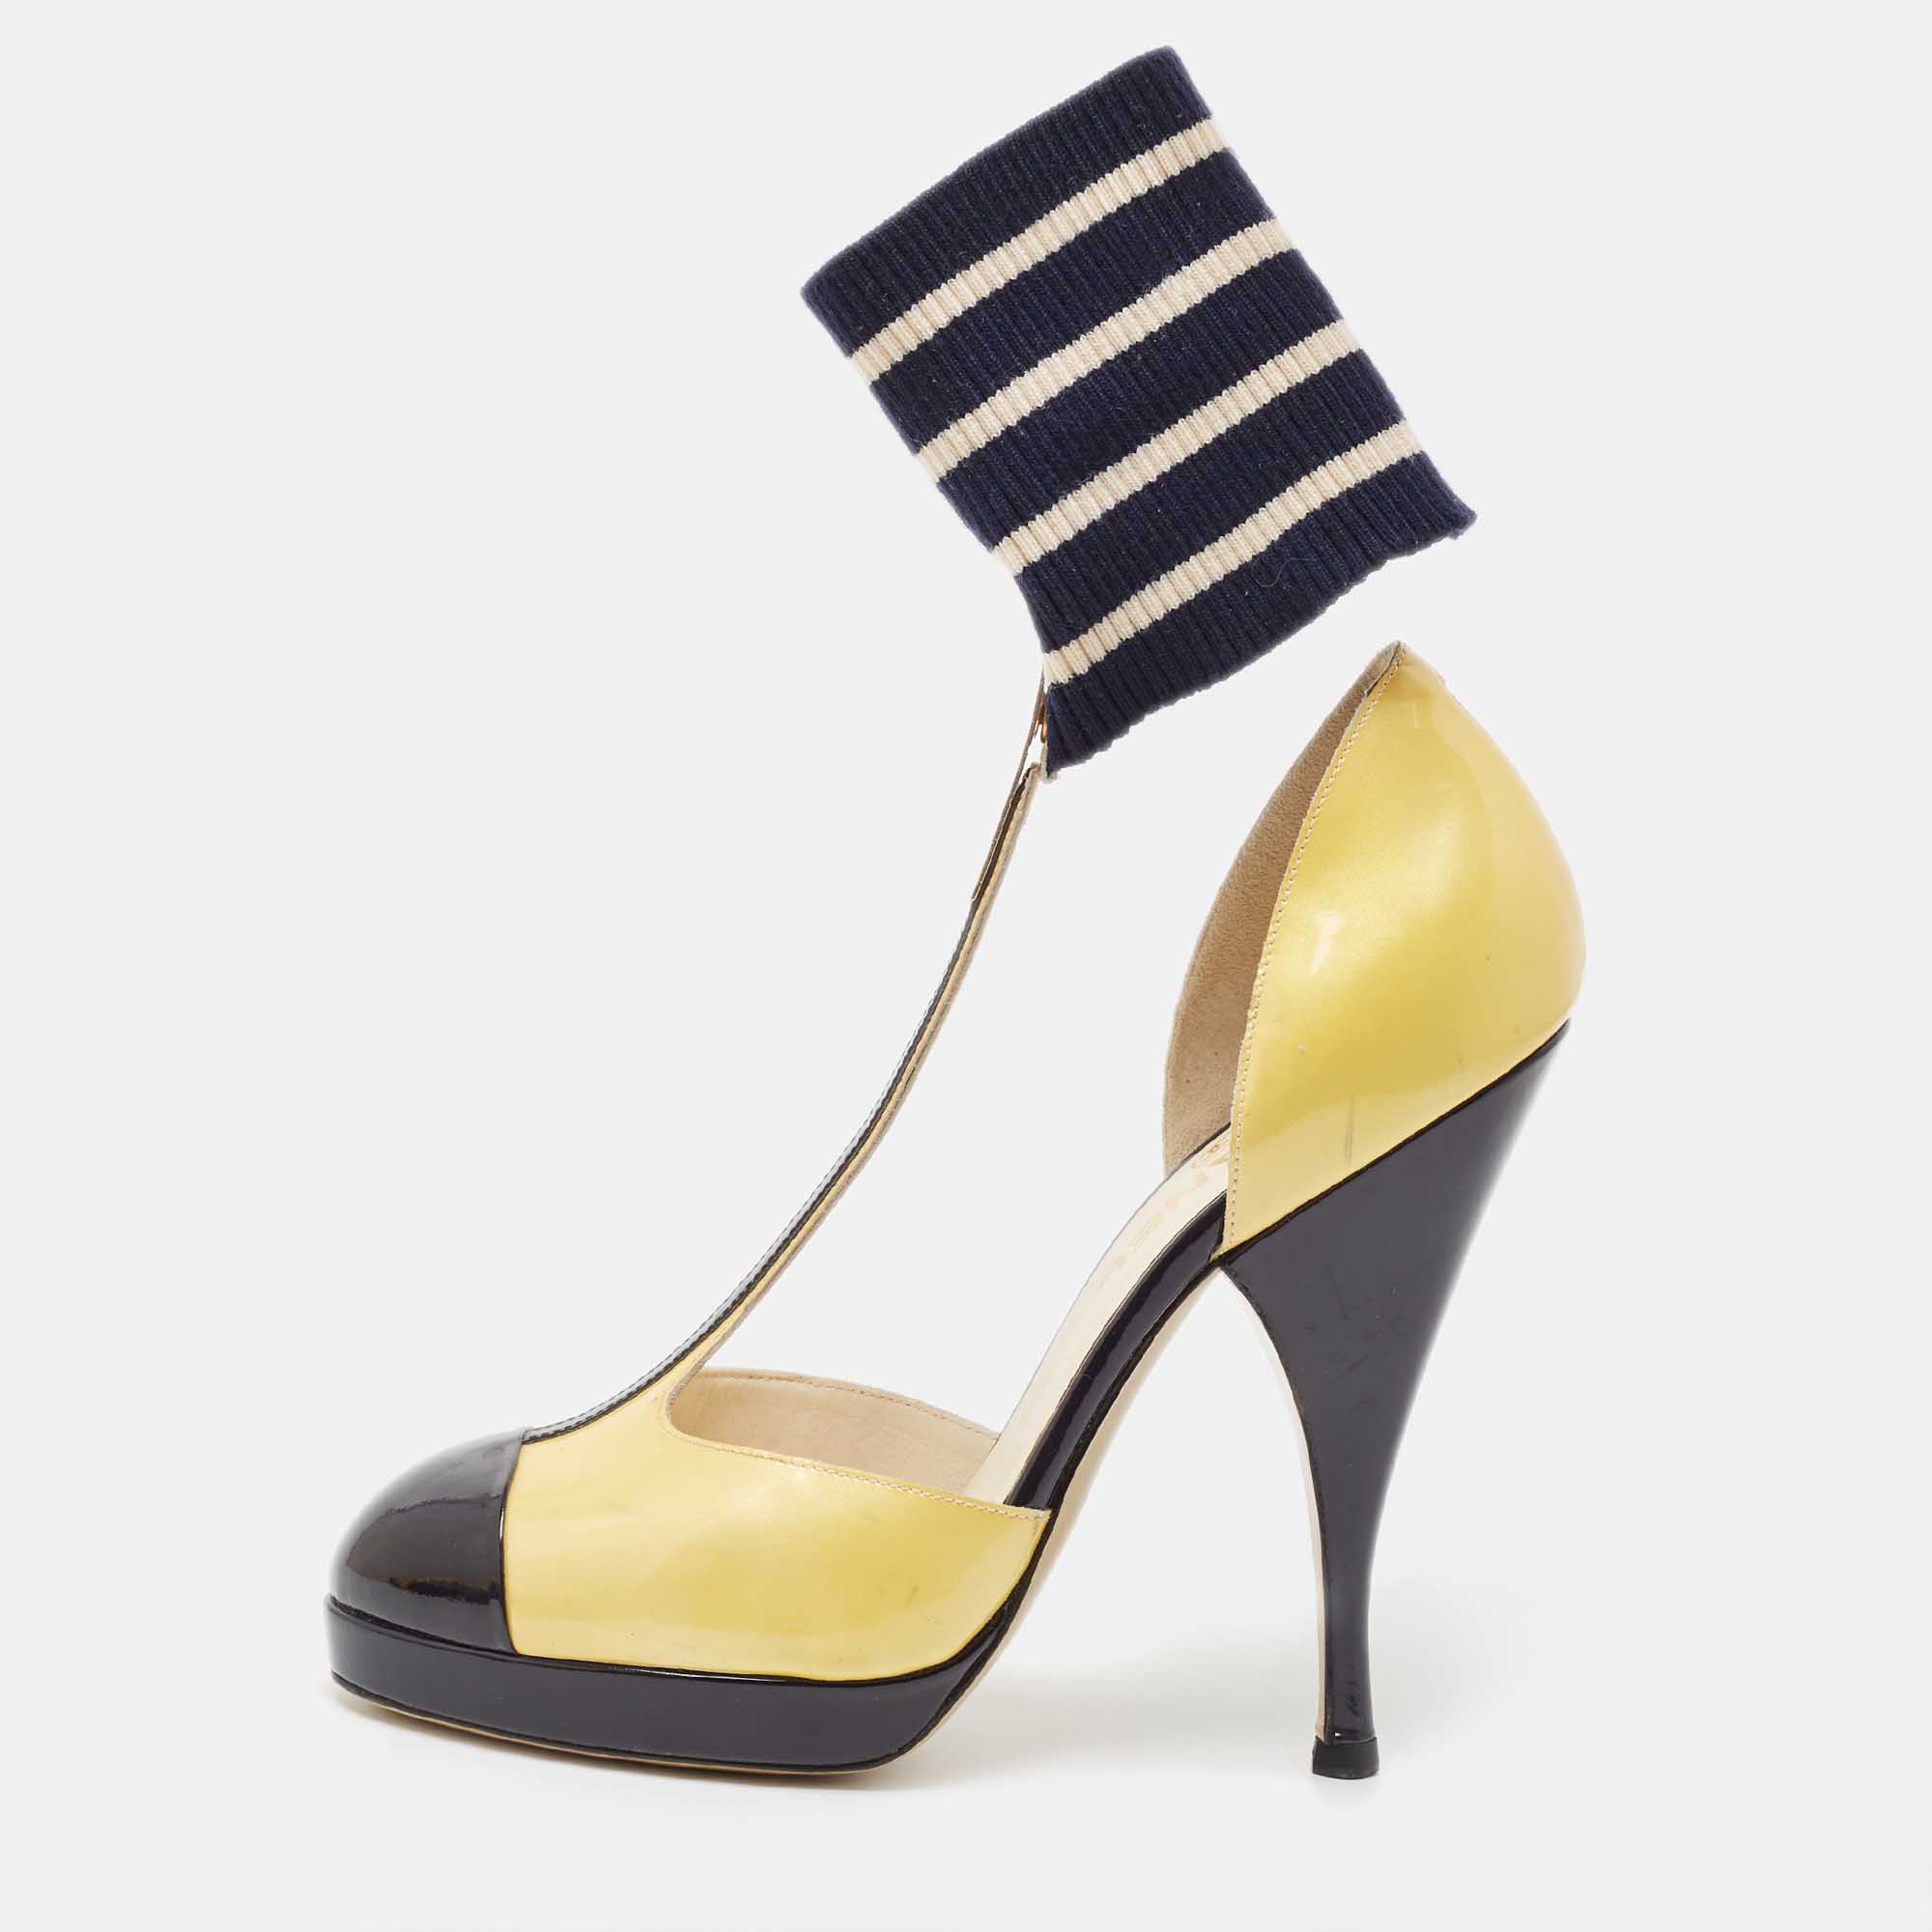 Chanel yellow/black patent leather t-strap ankle sock platform pumps size 39